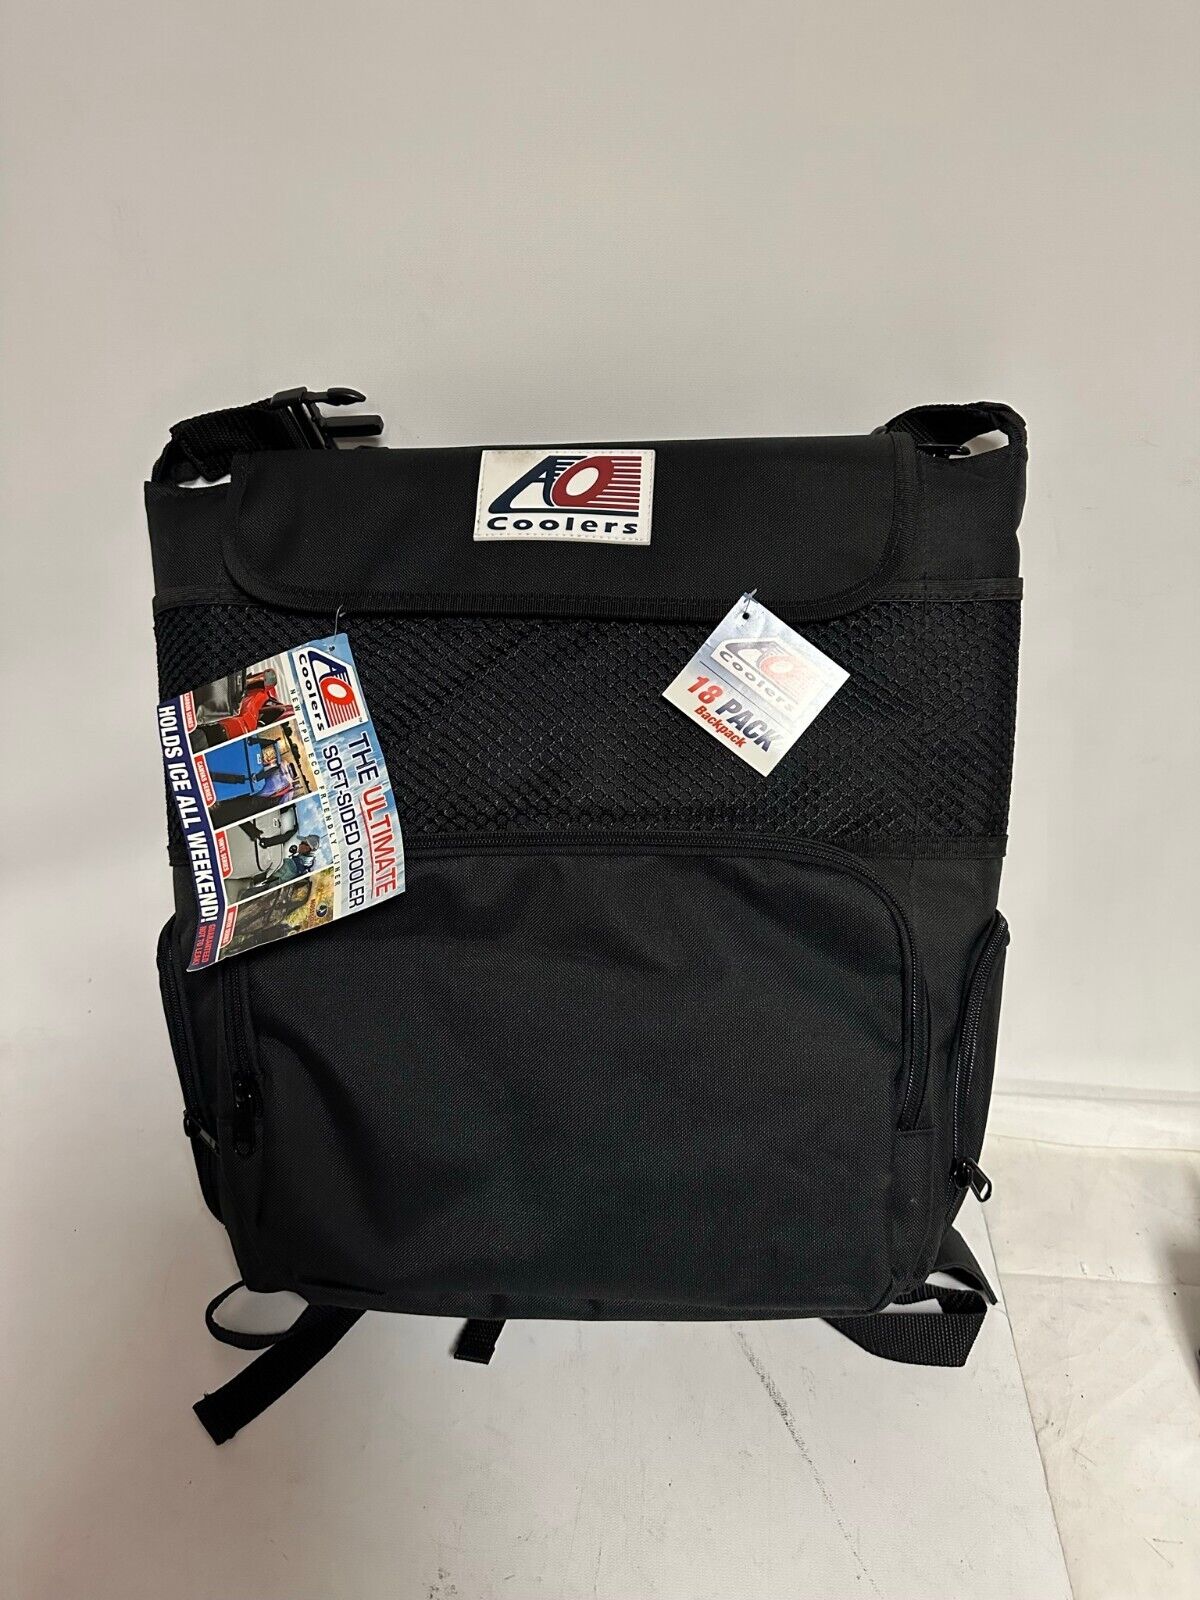 S Backpack Soft Cooler With High-density Insulation, Black, 